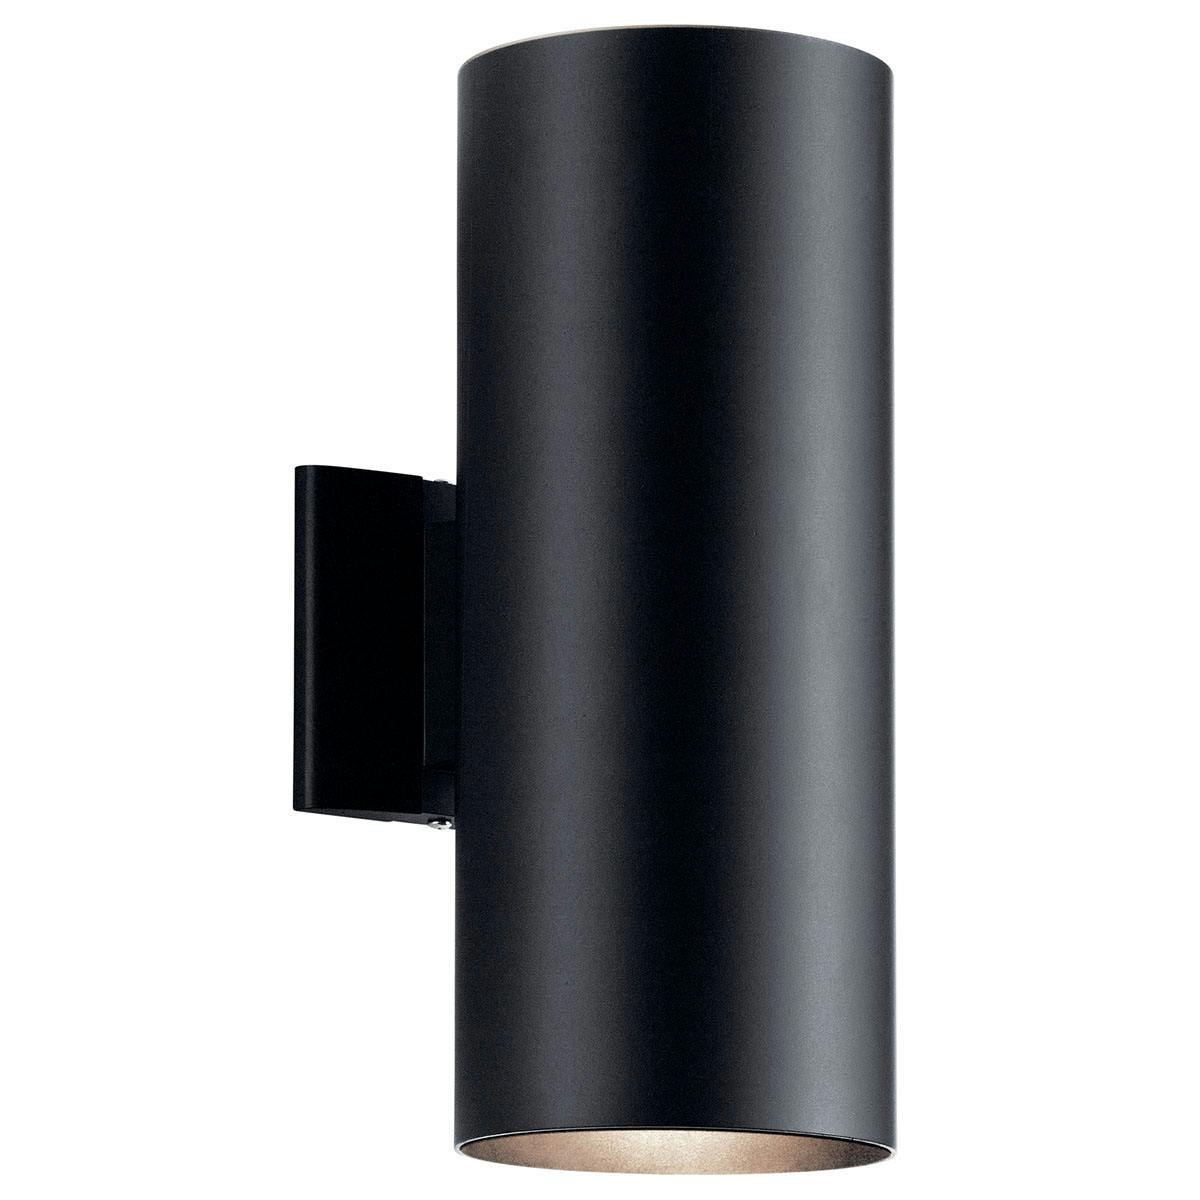 Cylinder 15" 2 Light Wall Light Black on a white background